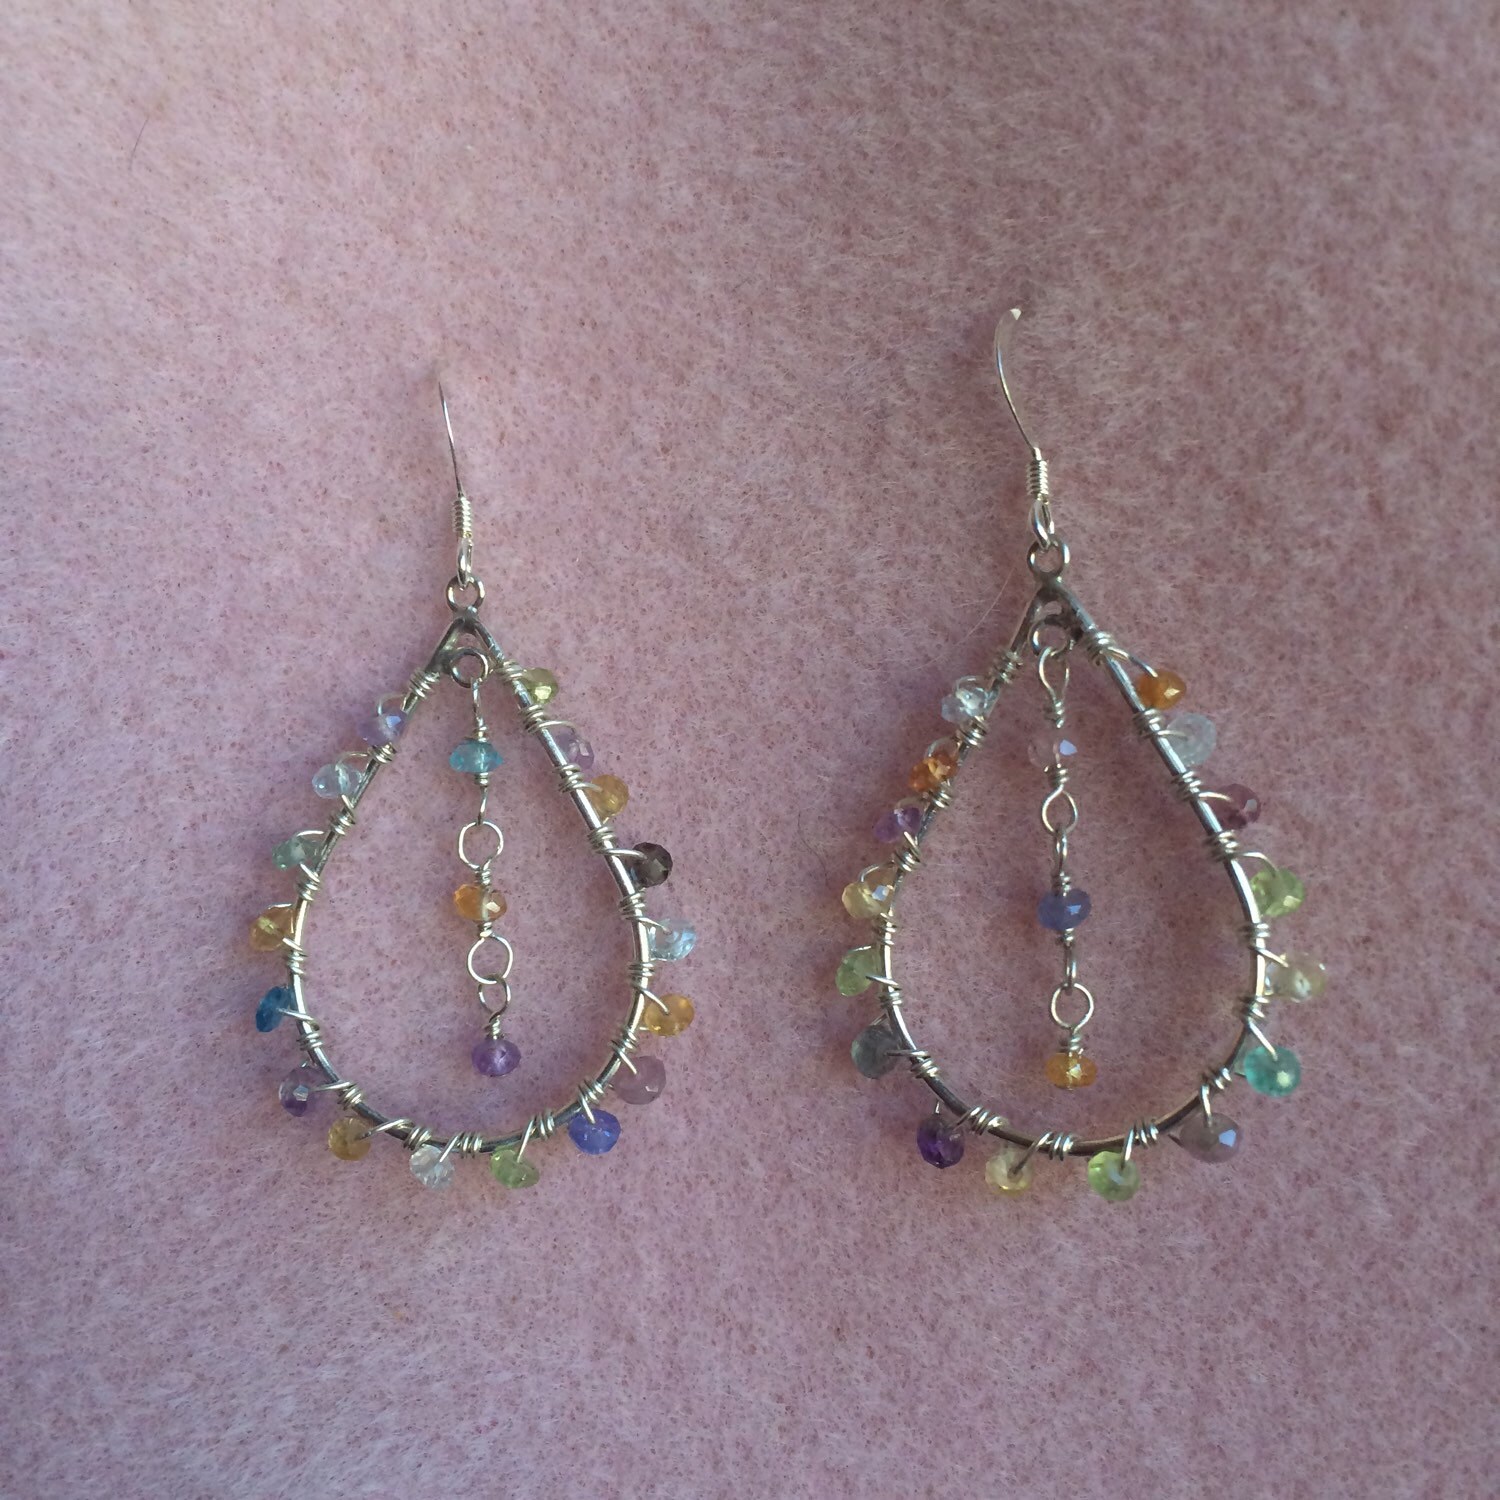 Pair of Beautiful Faceted Mixed Gemstone Teardrop Earrings YY-11106 